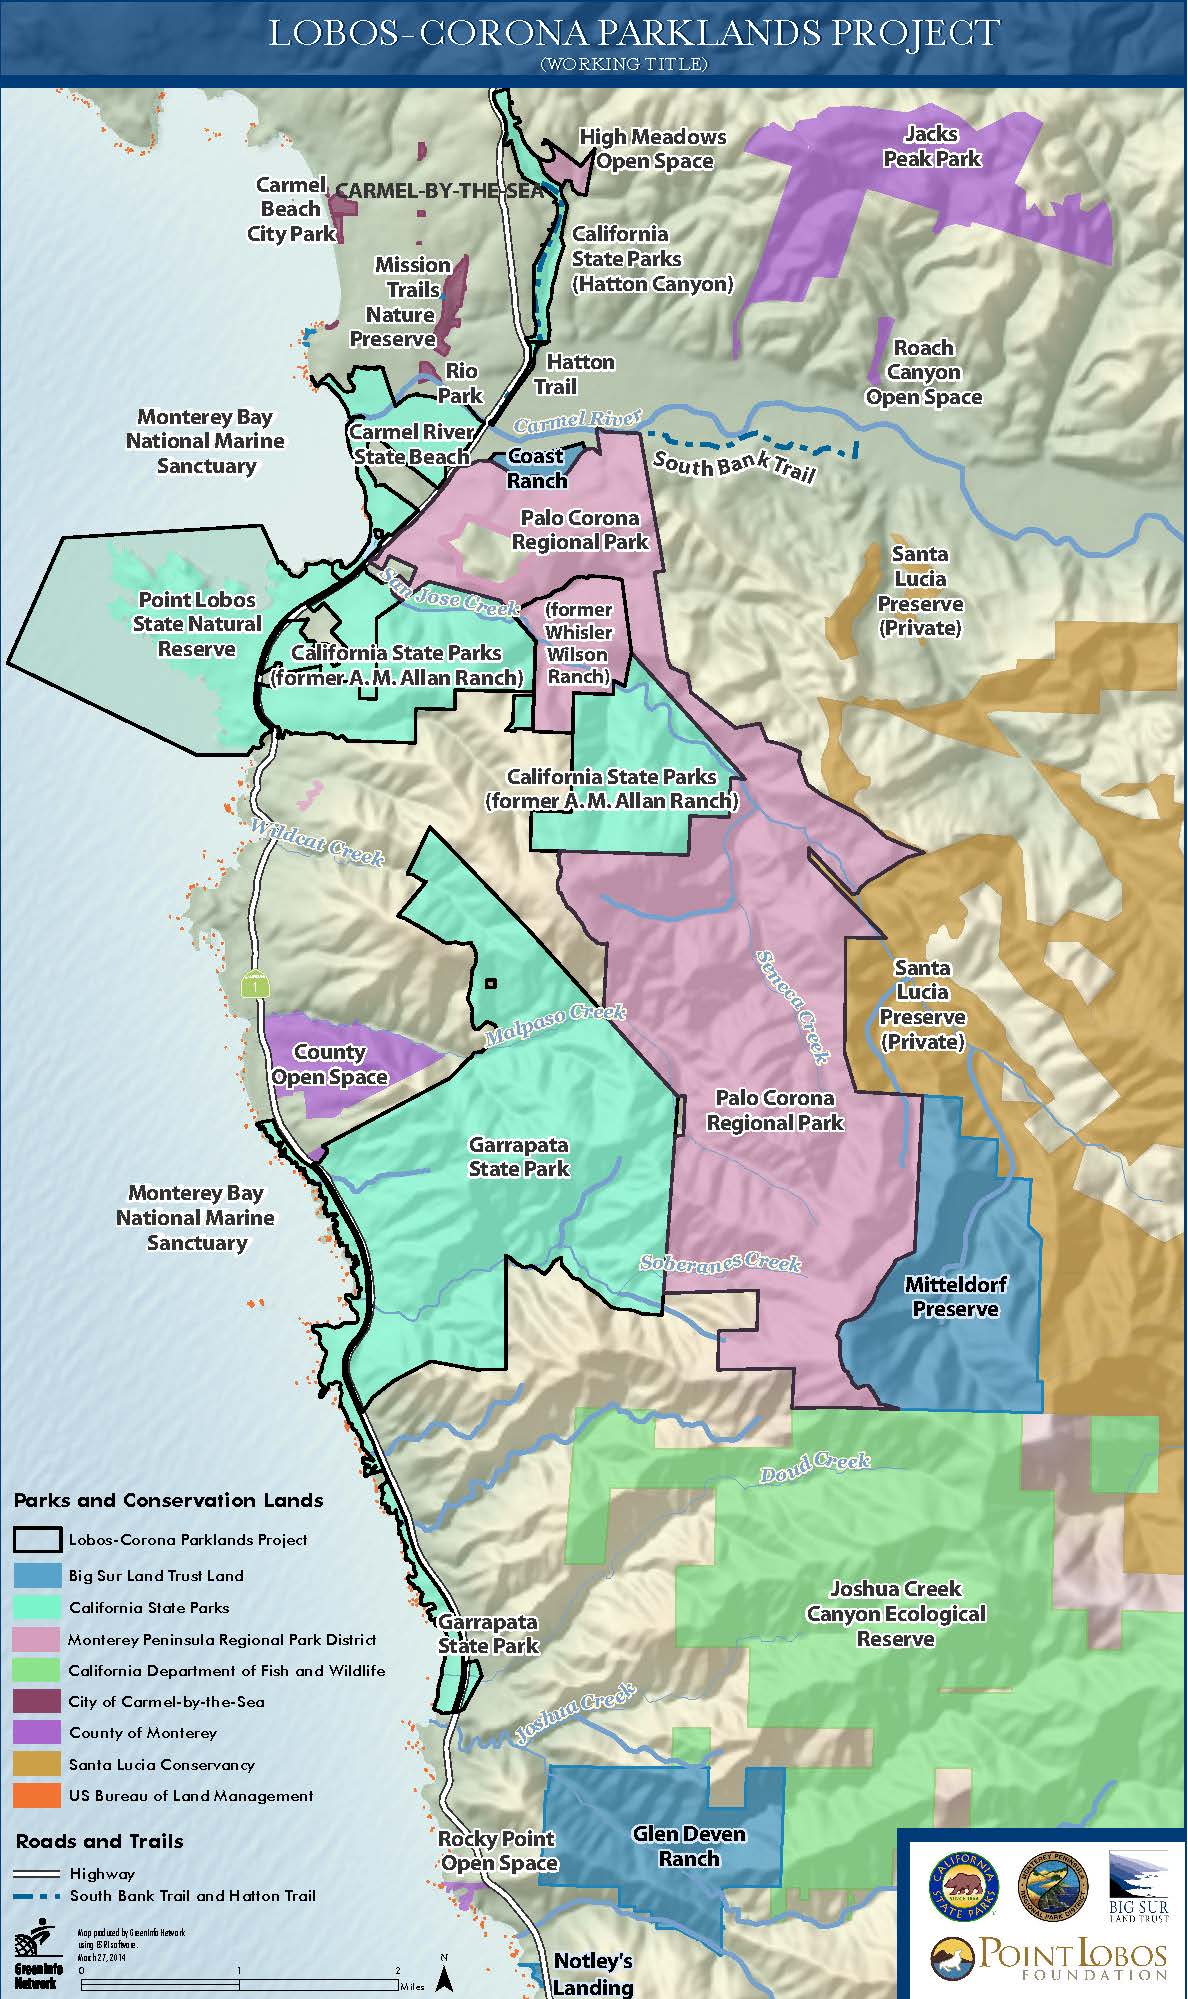 Lobos Corona Parklands Project Map.jpg